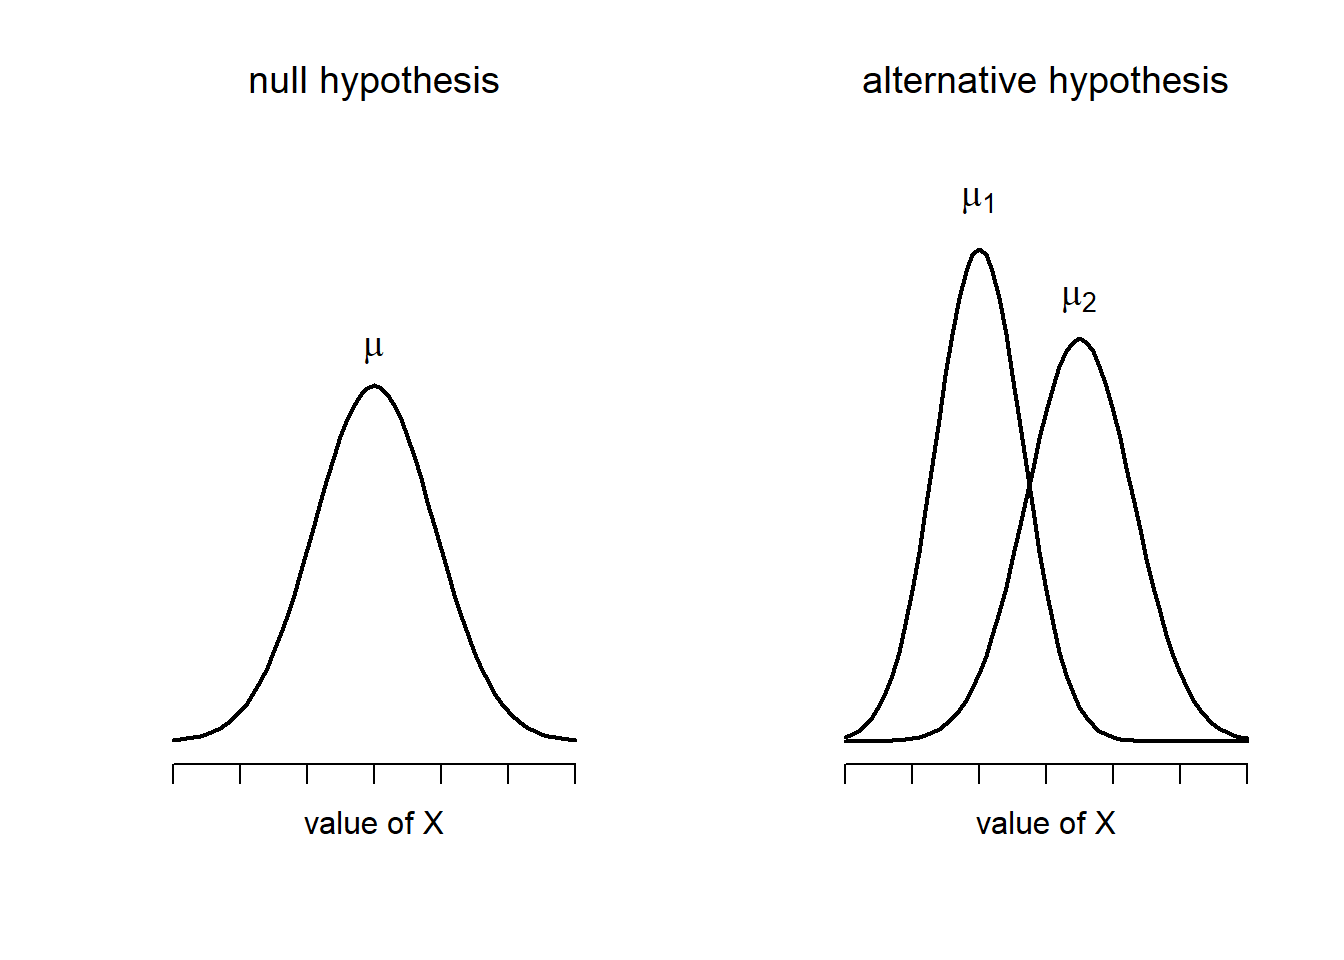 likelihood ratio test null and alternative hypothesis